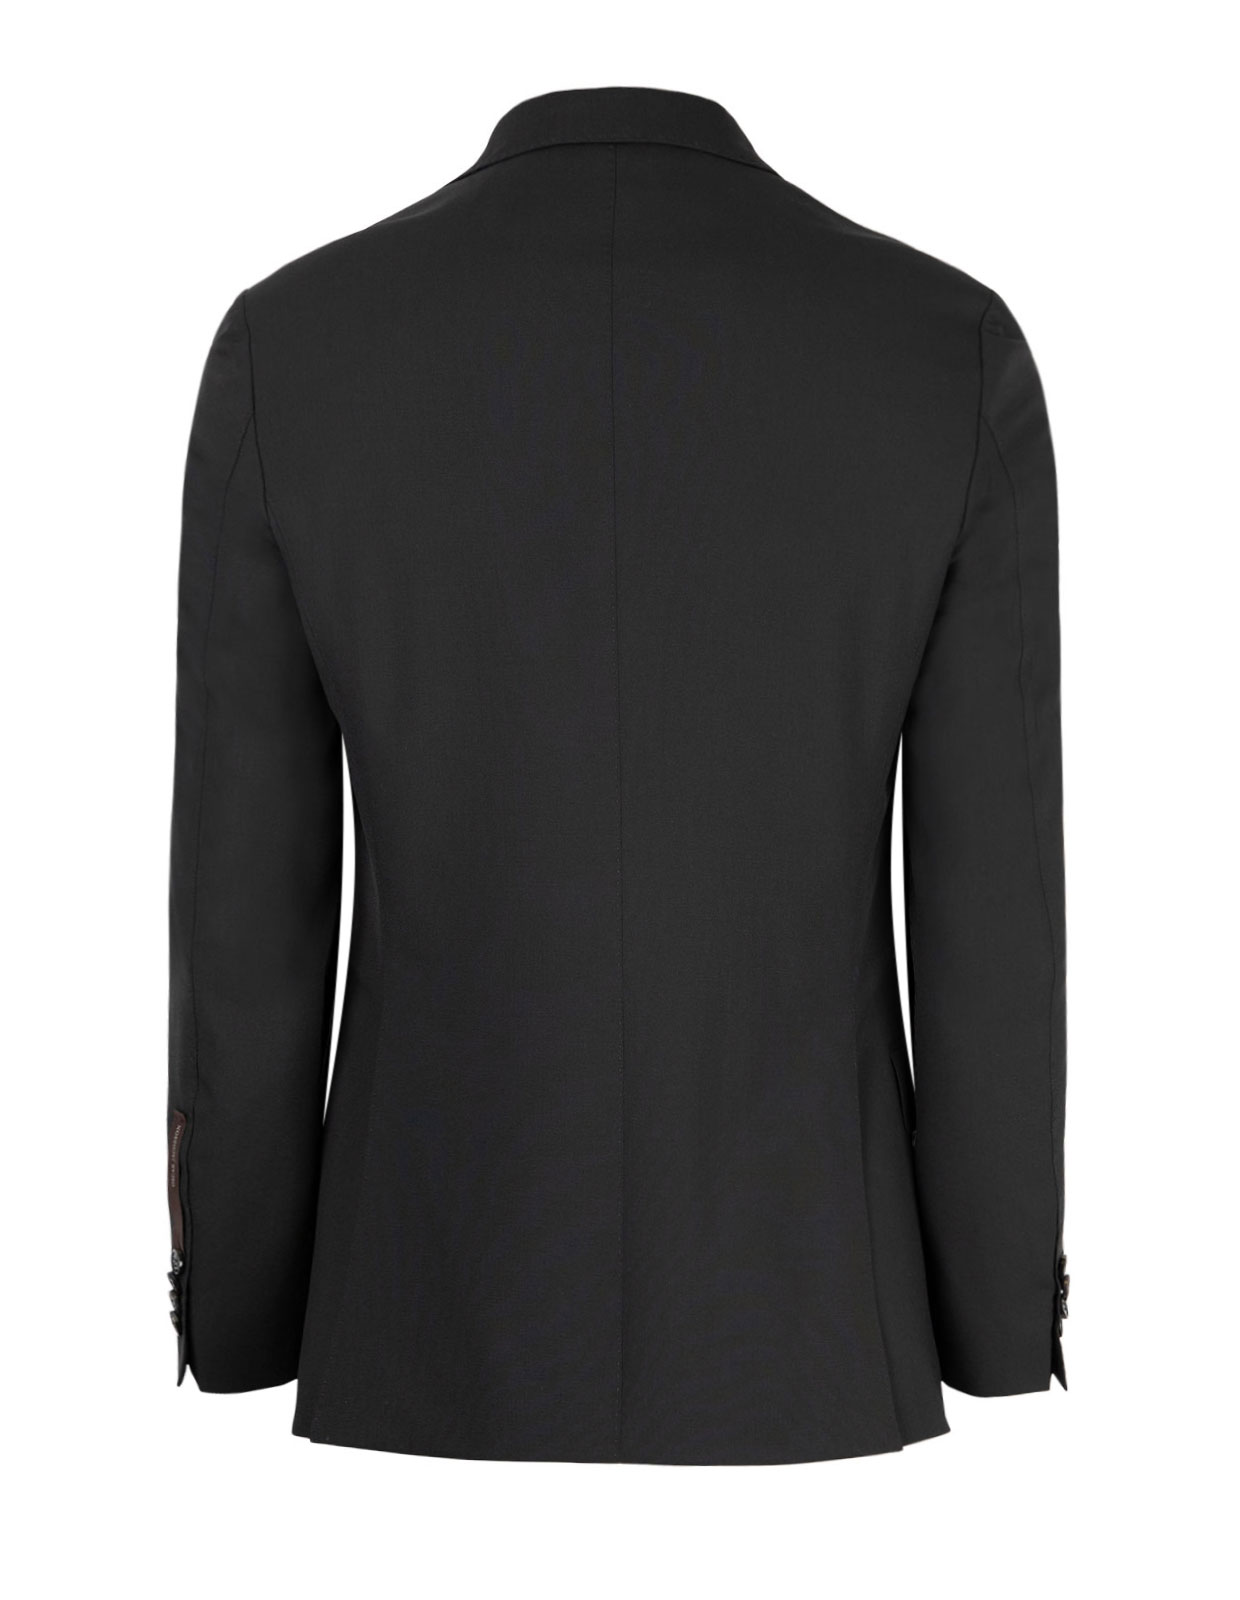 Edmund Suit Jacket Slim Fit Mix & Match Wool Black Stl 152